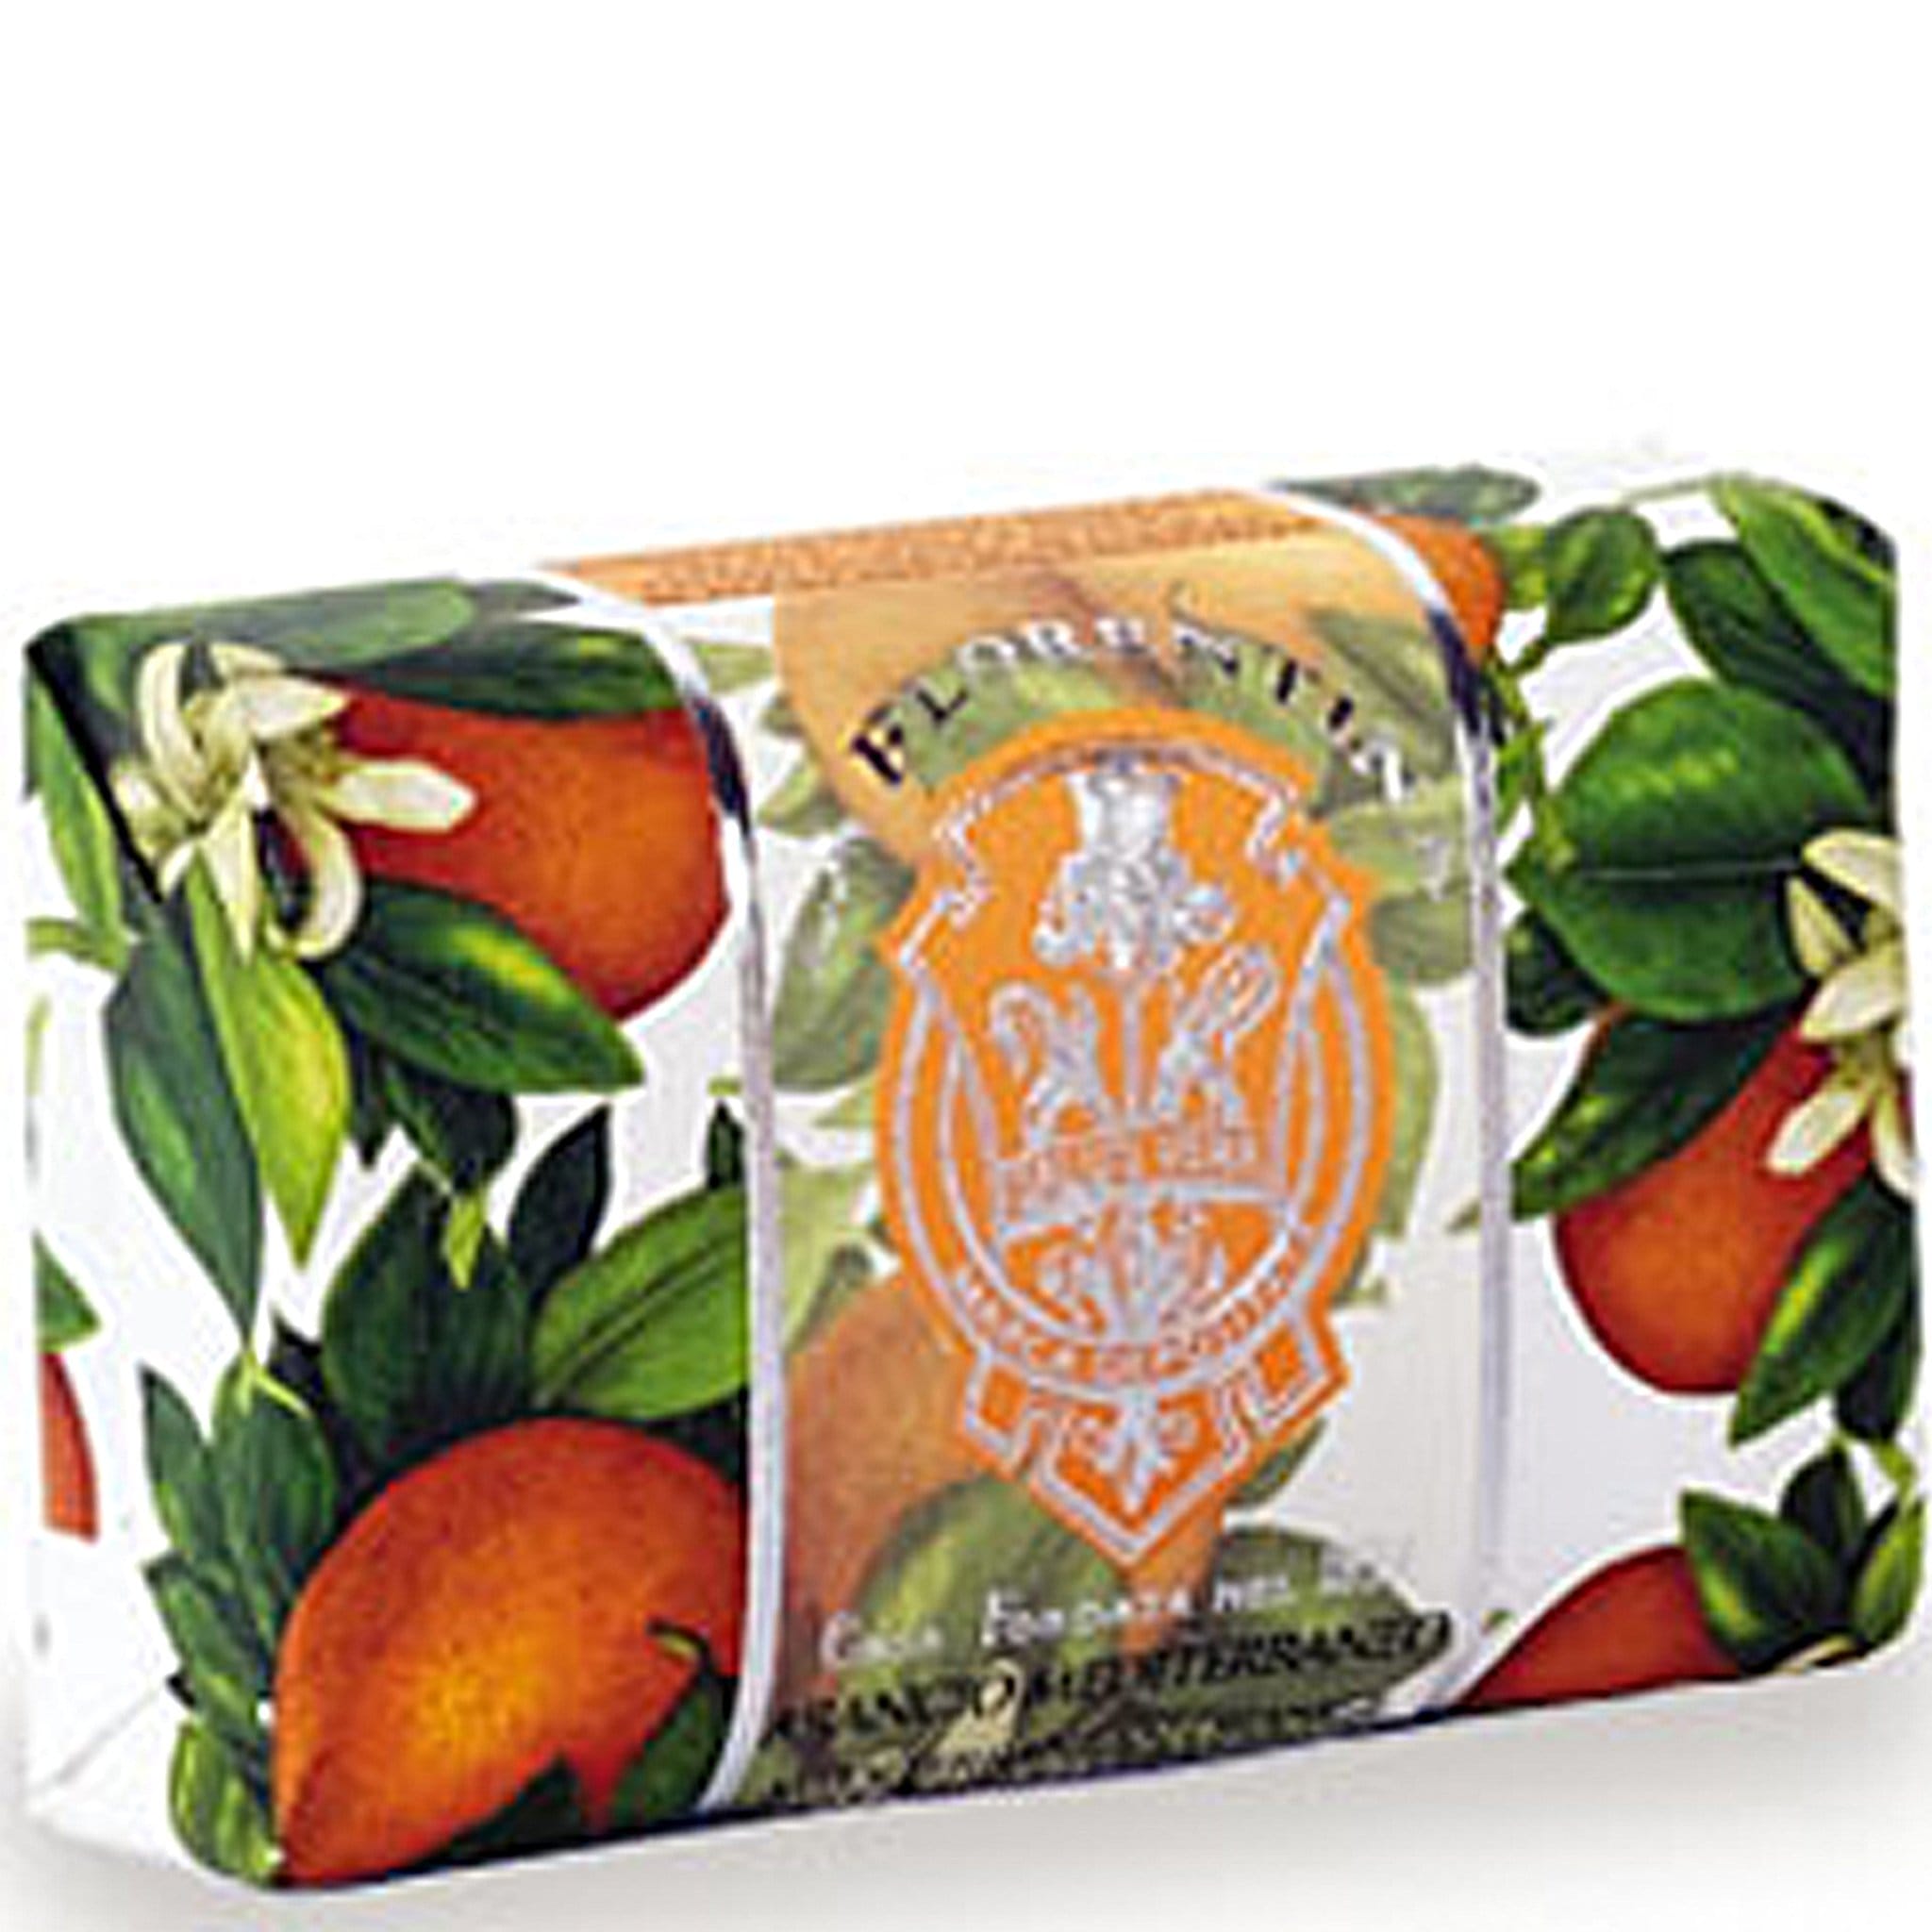 Italian Luxury Group 200g Bar Soap La Florentina Mediterranean Orange Bar Soap 200g Brand